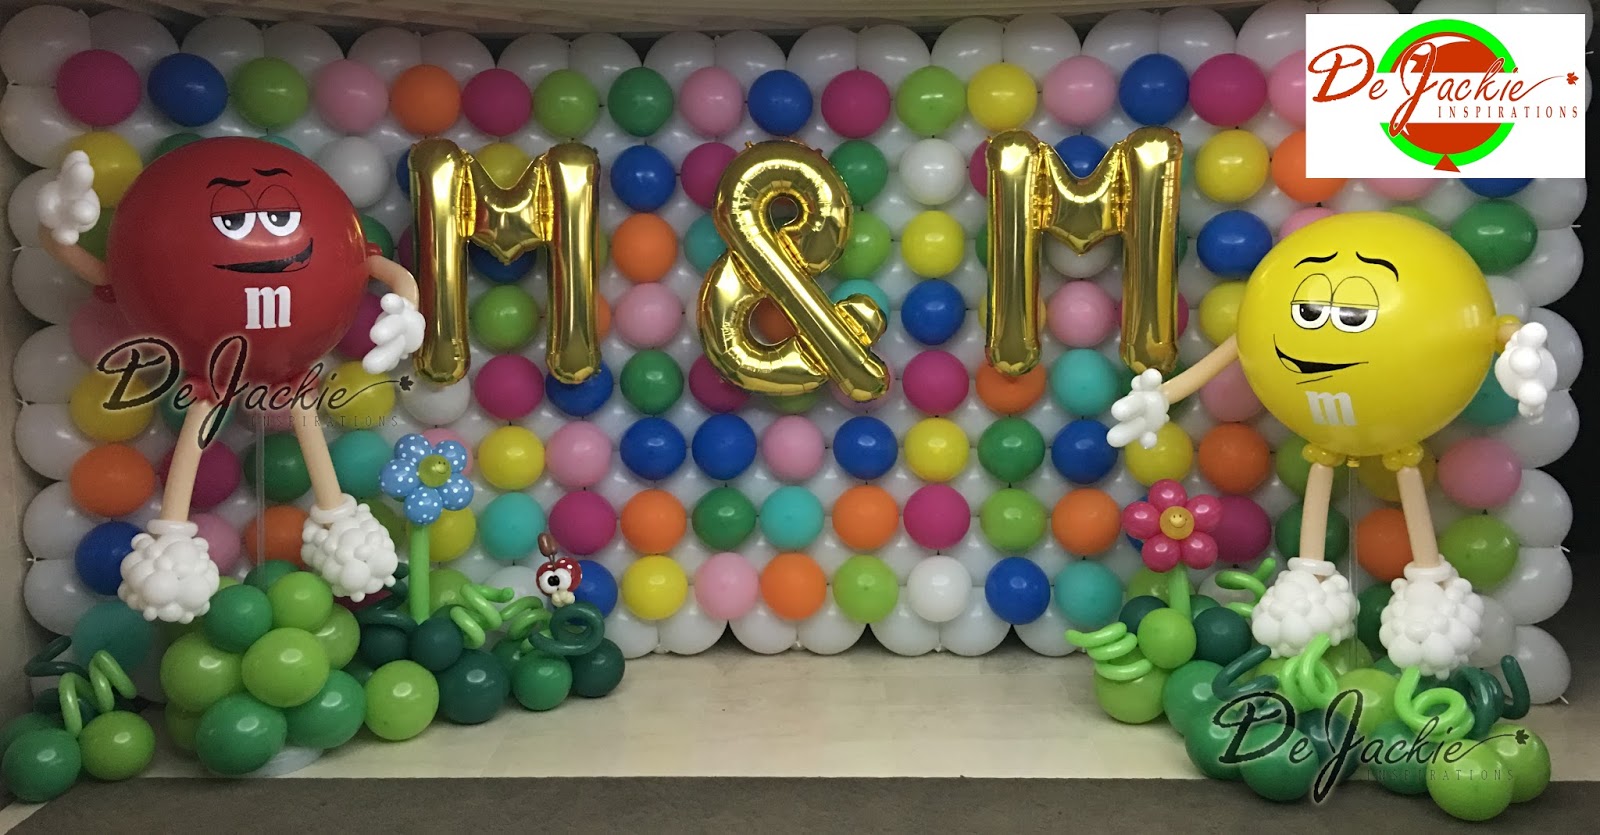 Balloon decorations for weddings, birthday parties, balloon